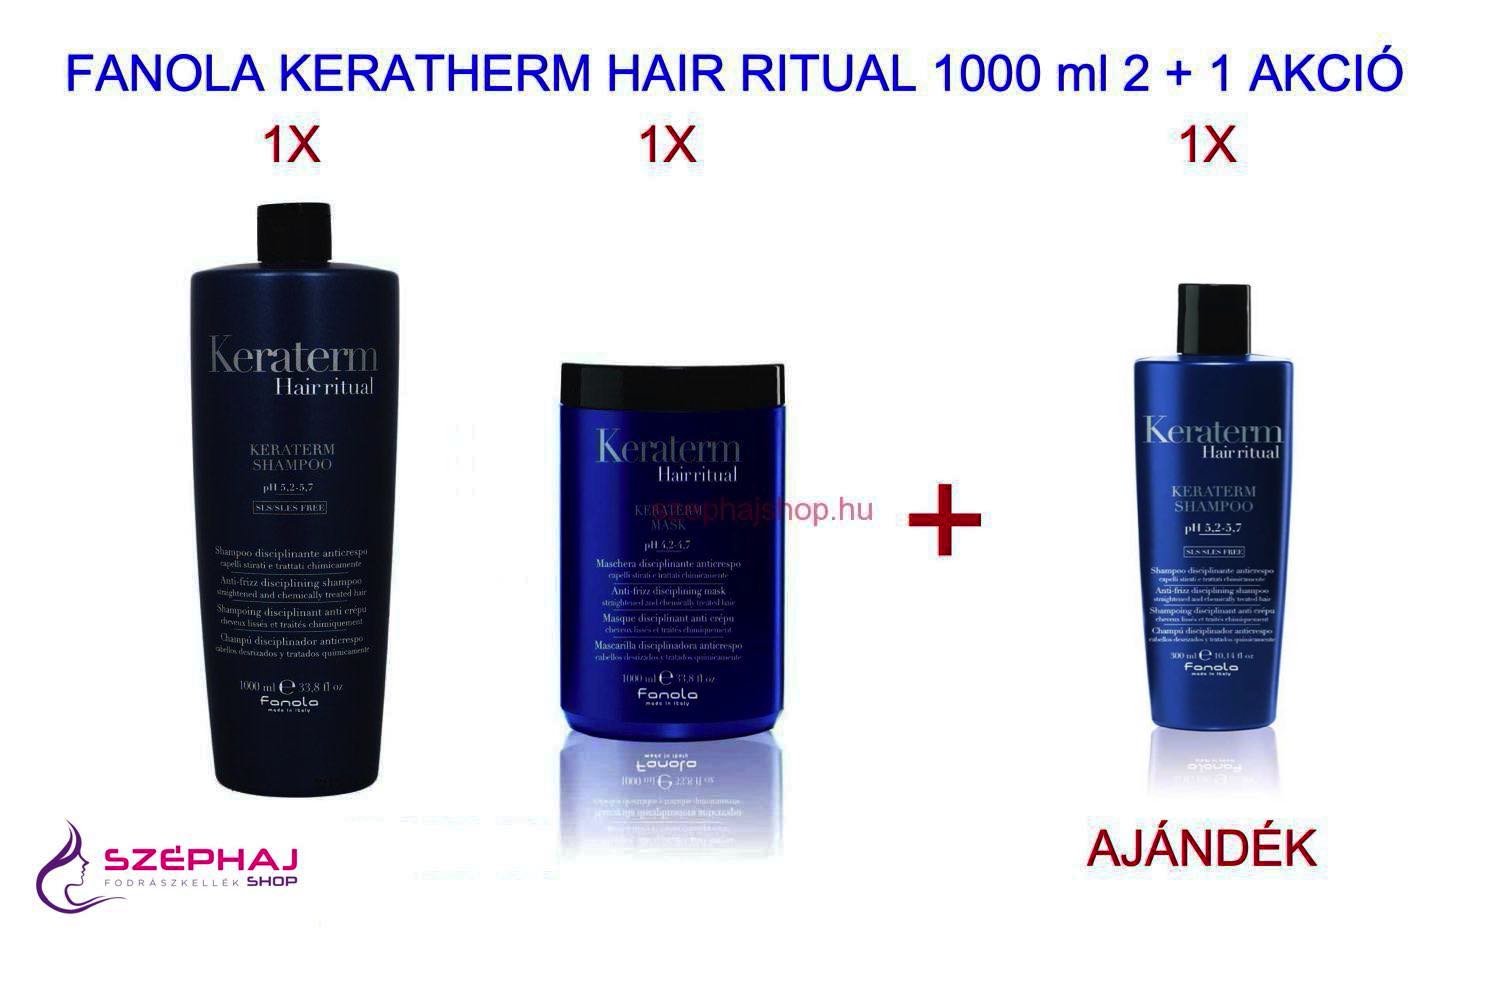 FANOLA Keraterm HairRitual Shampoo 1000 ml + Mask 1000 ml  2+1 AKCIÓ